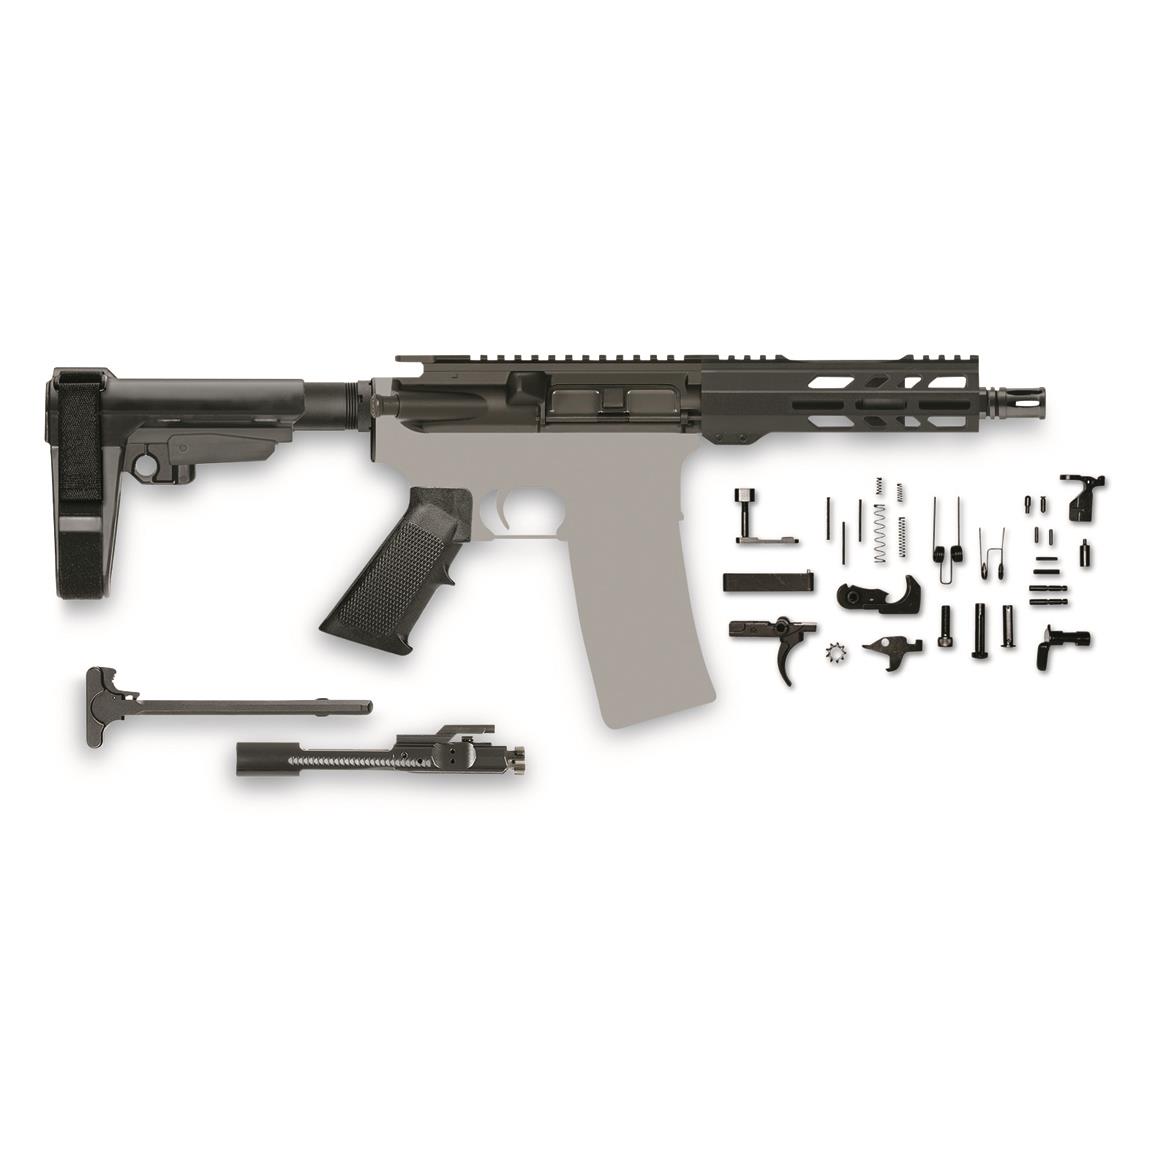 CBC AR-15 Pistol Kit, Semi-auto, 5.56/.223, 7.5" Barrel, SBA3 Brace, No Stripped Lower or Magazine